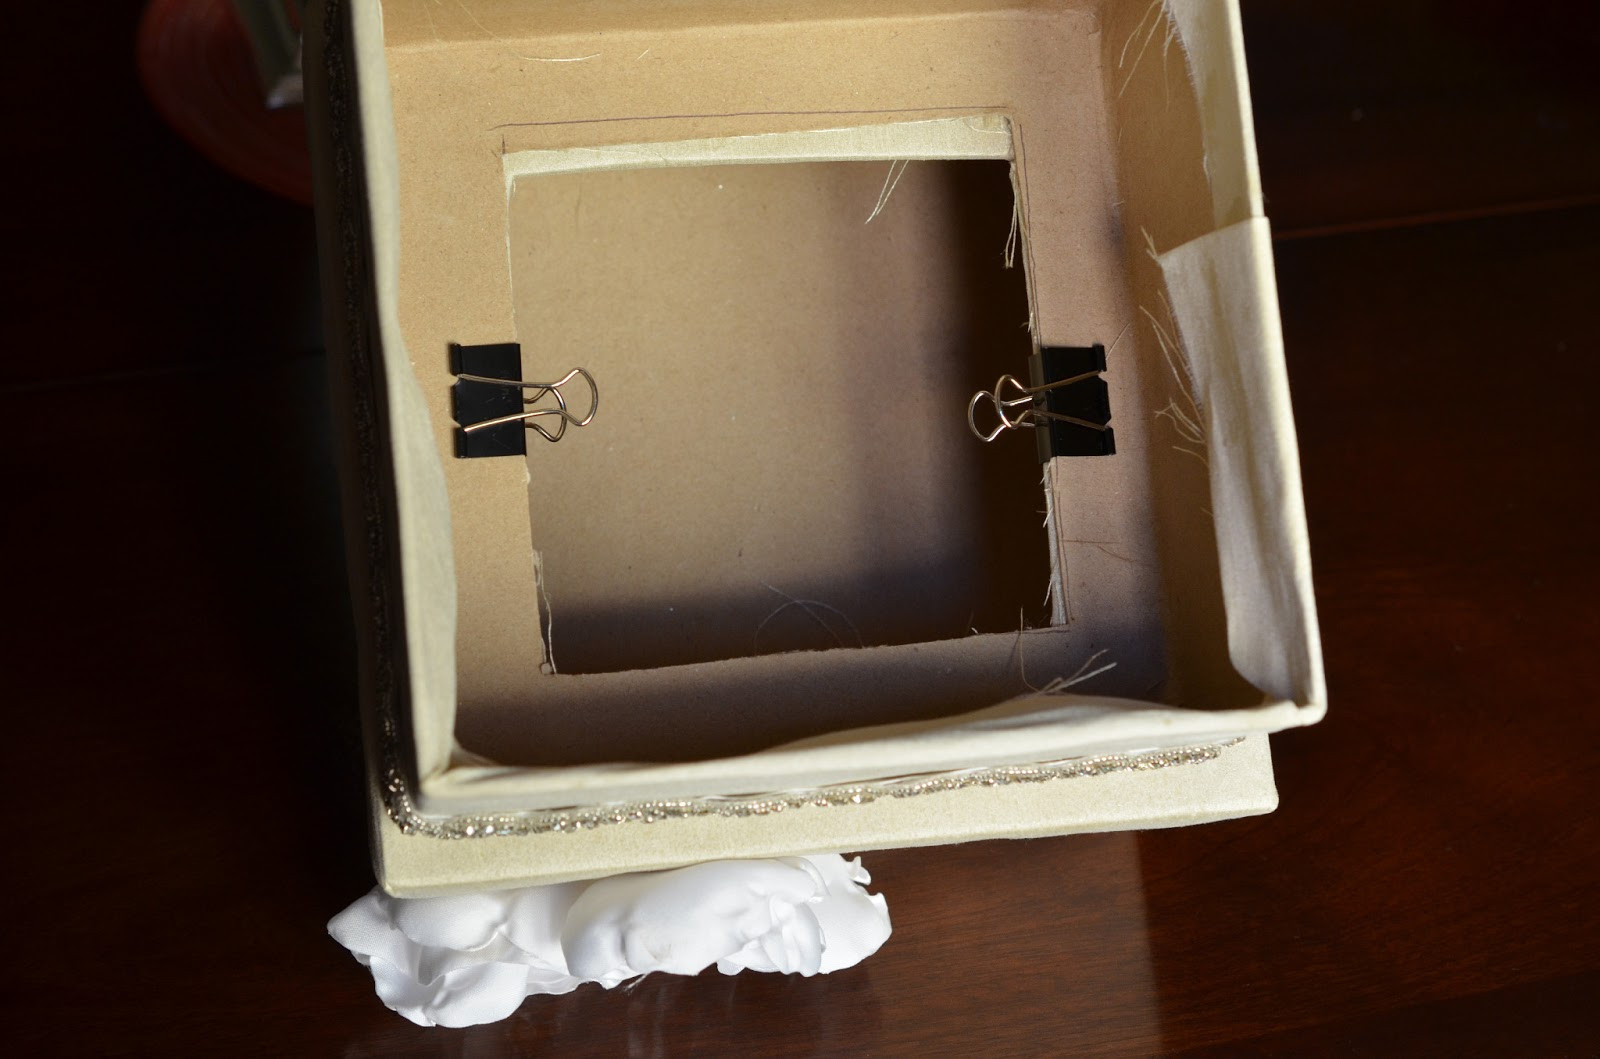 Best ideas about DIY Card Box
. Save or Pin DIY Wedding Card Box Tutorial Andrea Lynn HANDMADE Now.